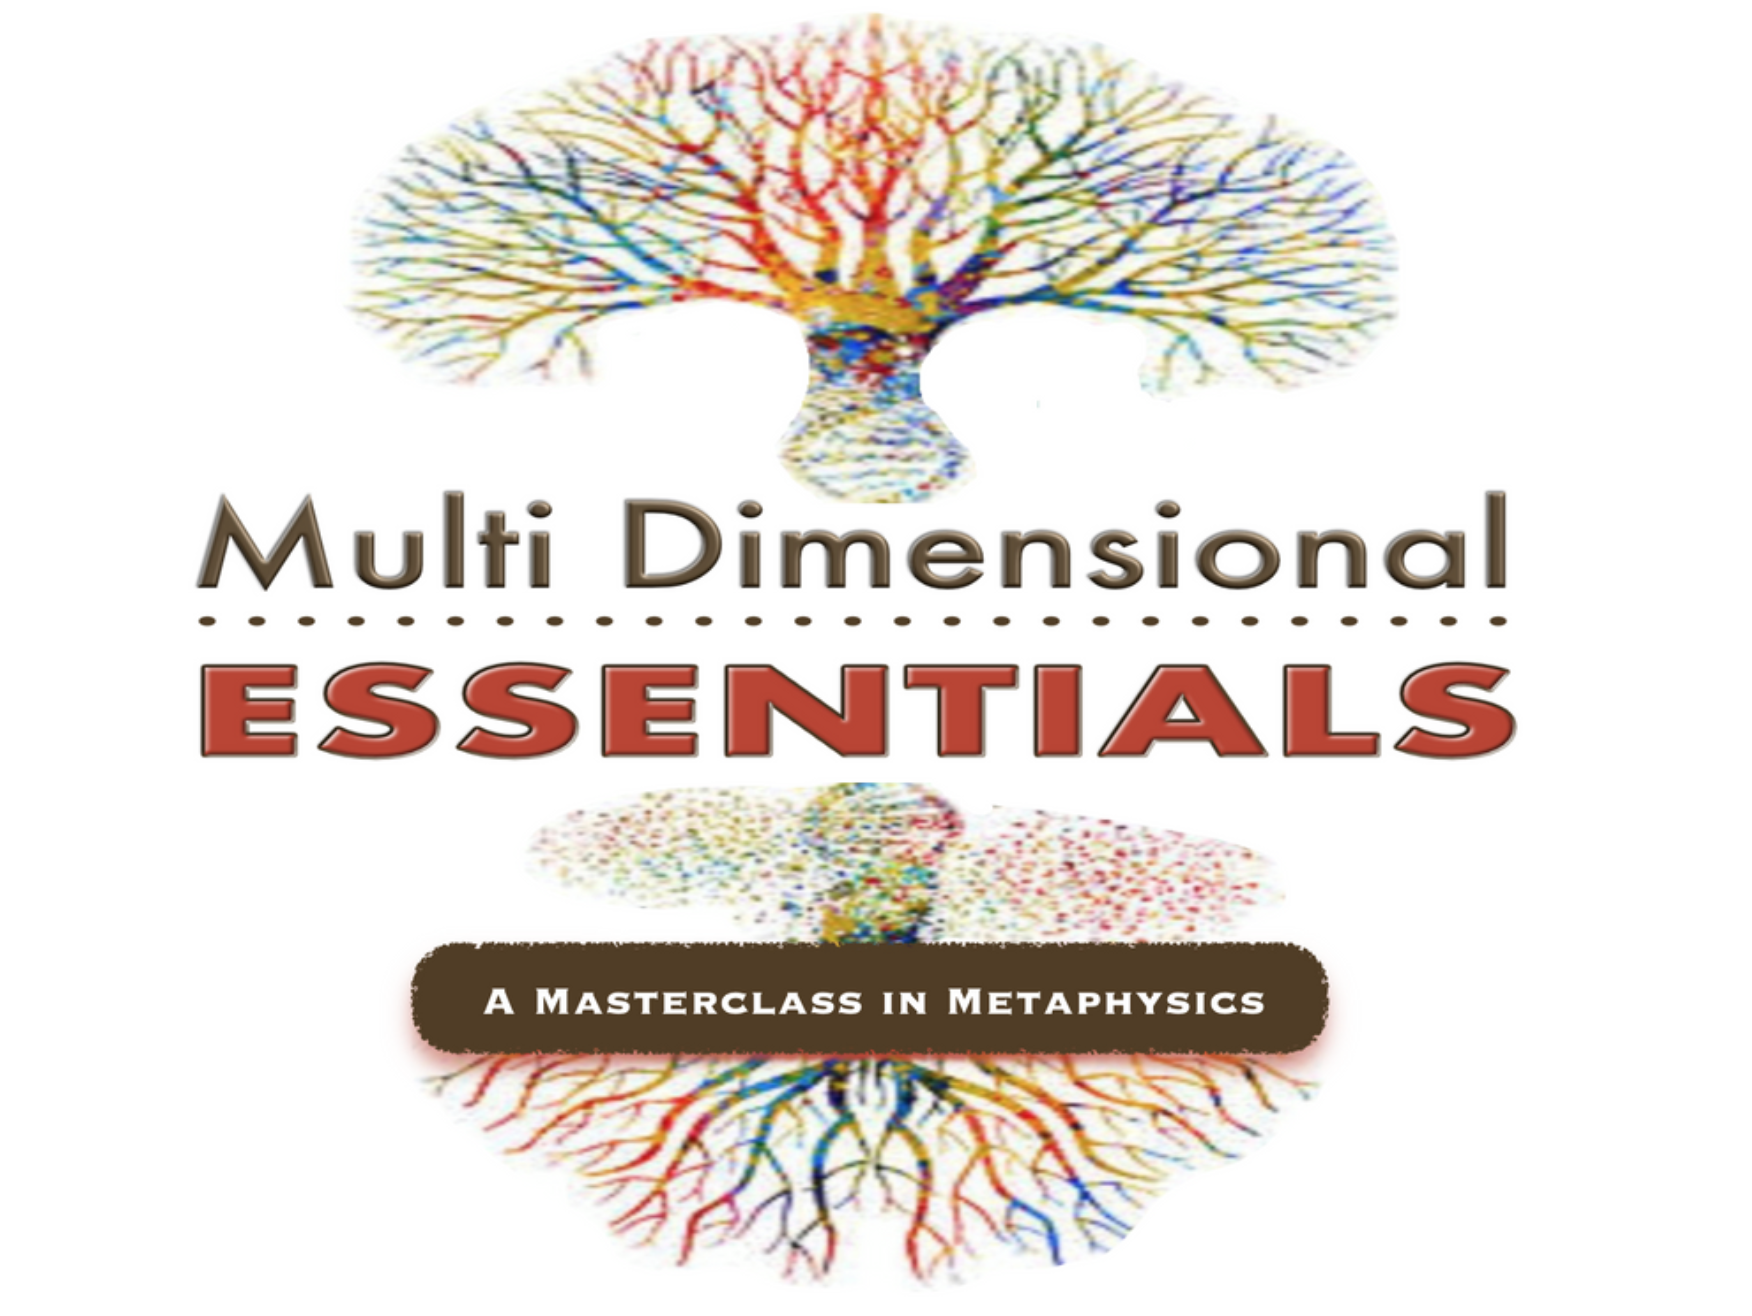 veda dave multi dimensional essentials masterclass metaphysics